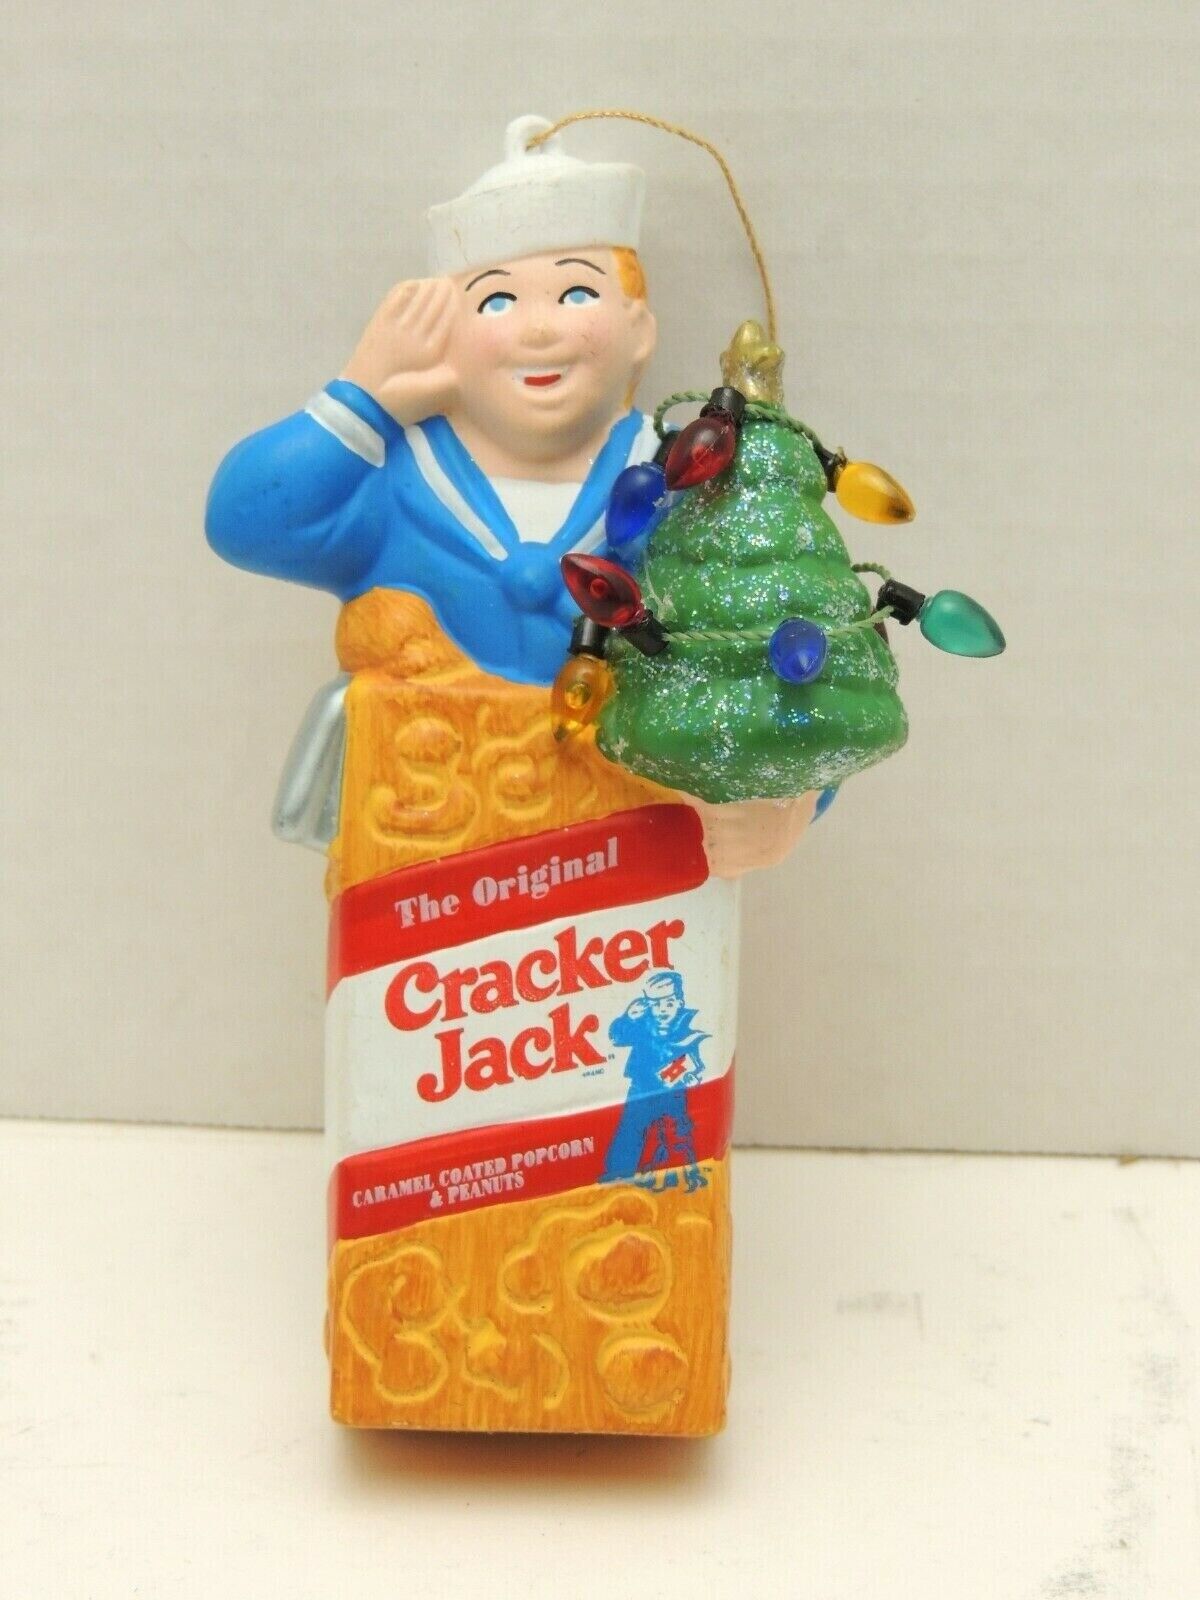 1999 Cracker Jack Box Ornament with Sailor Holding Xmas Tree